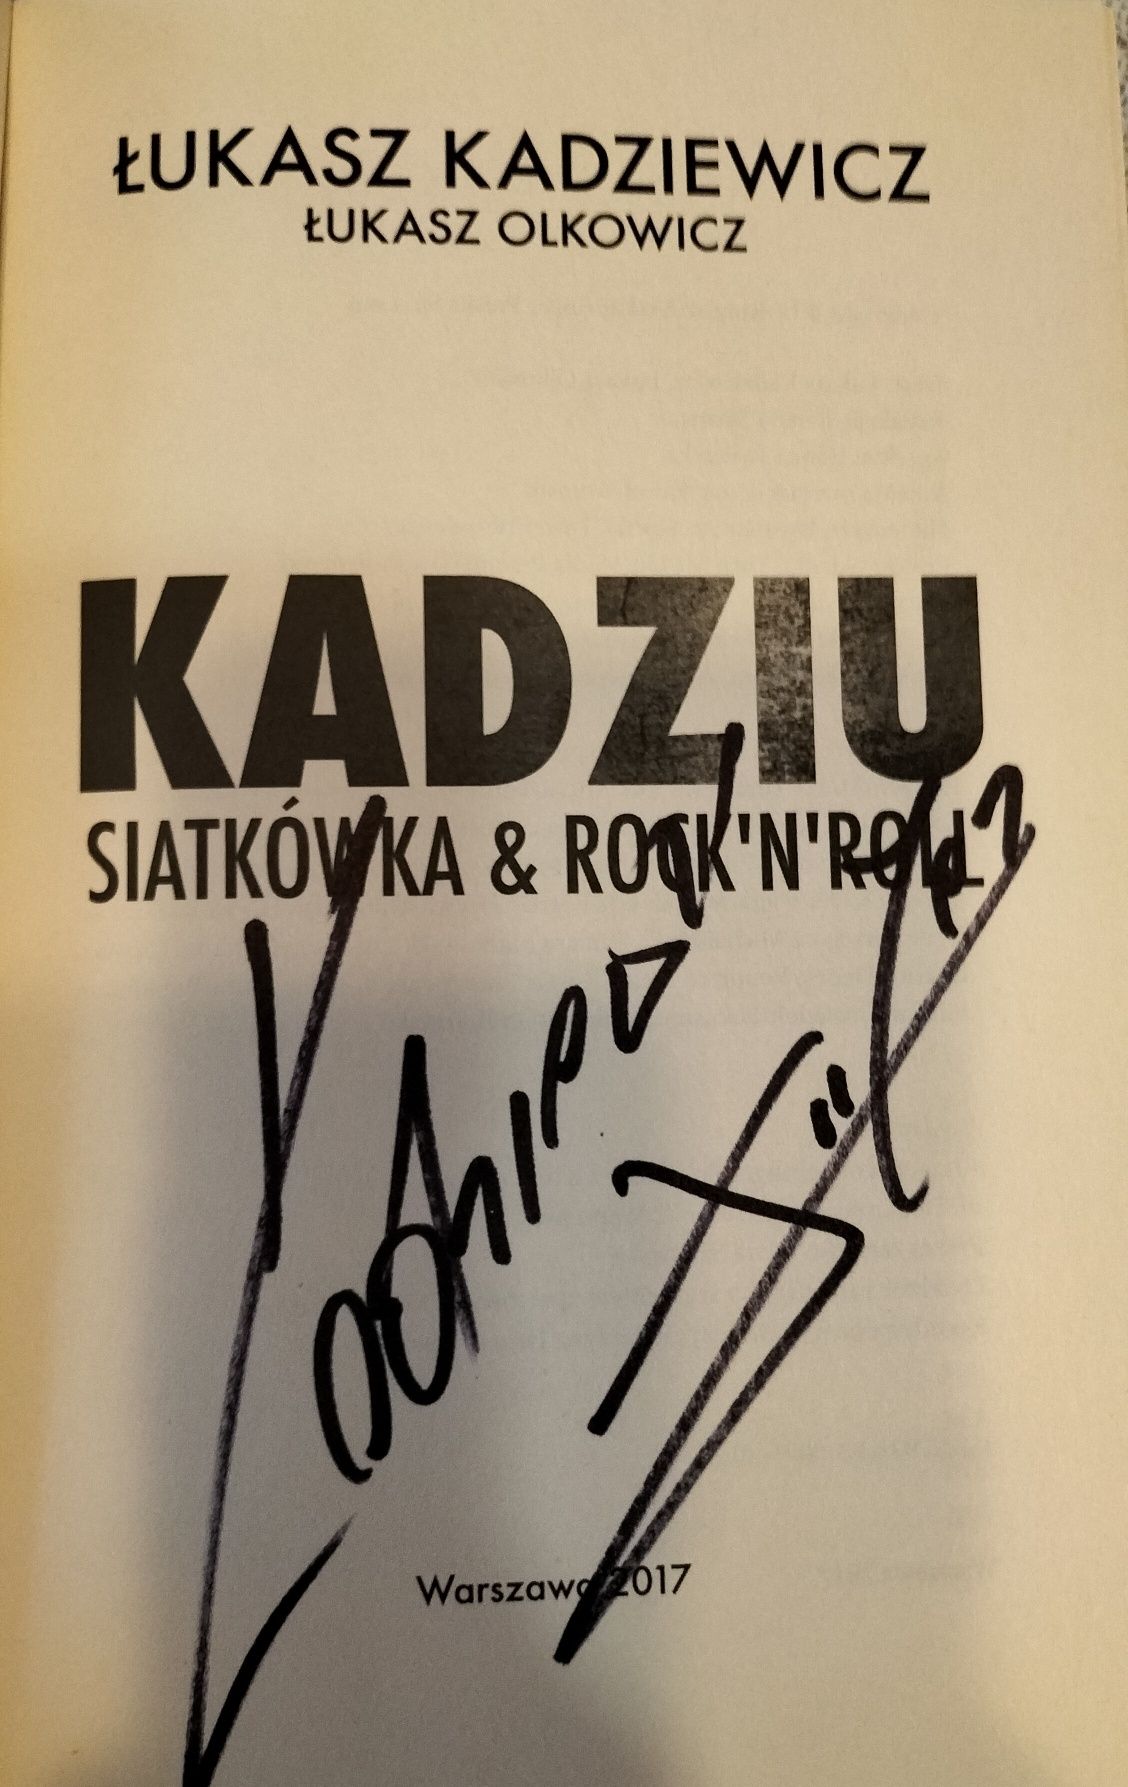 Kadziu - z autografem